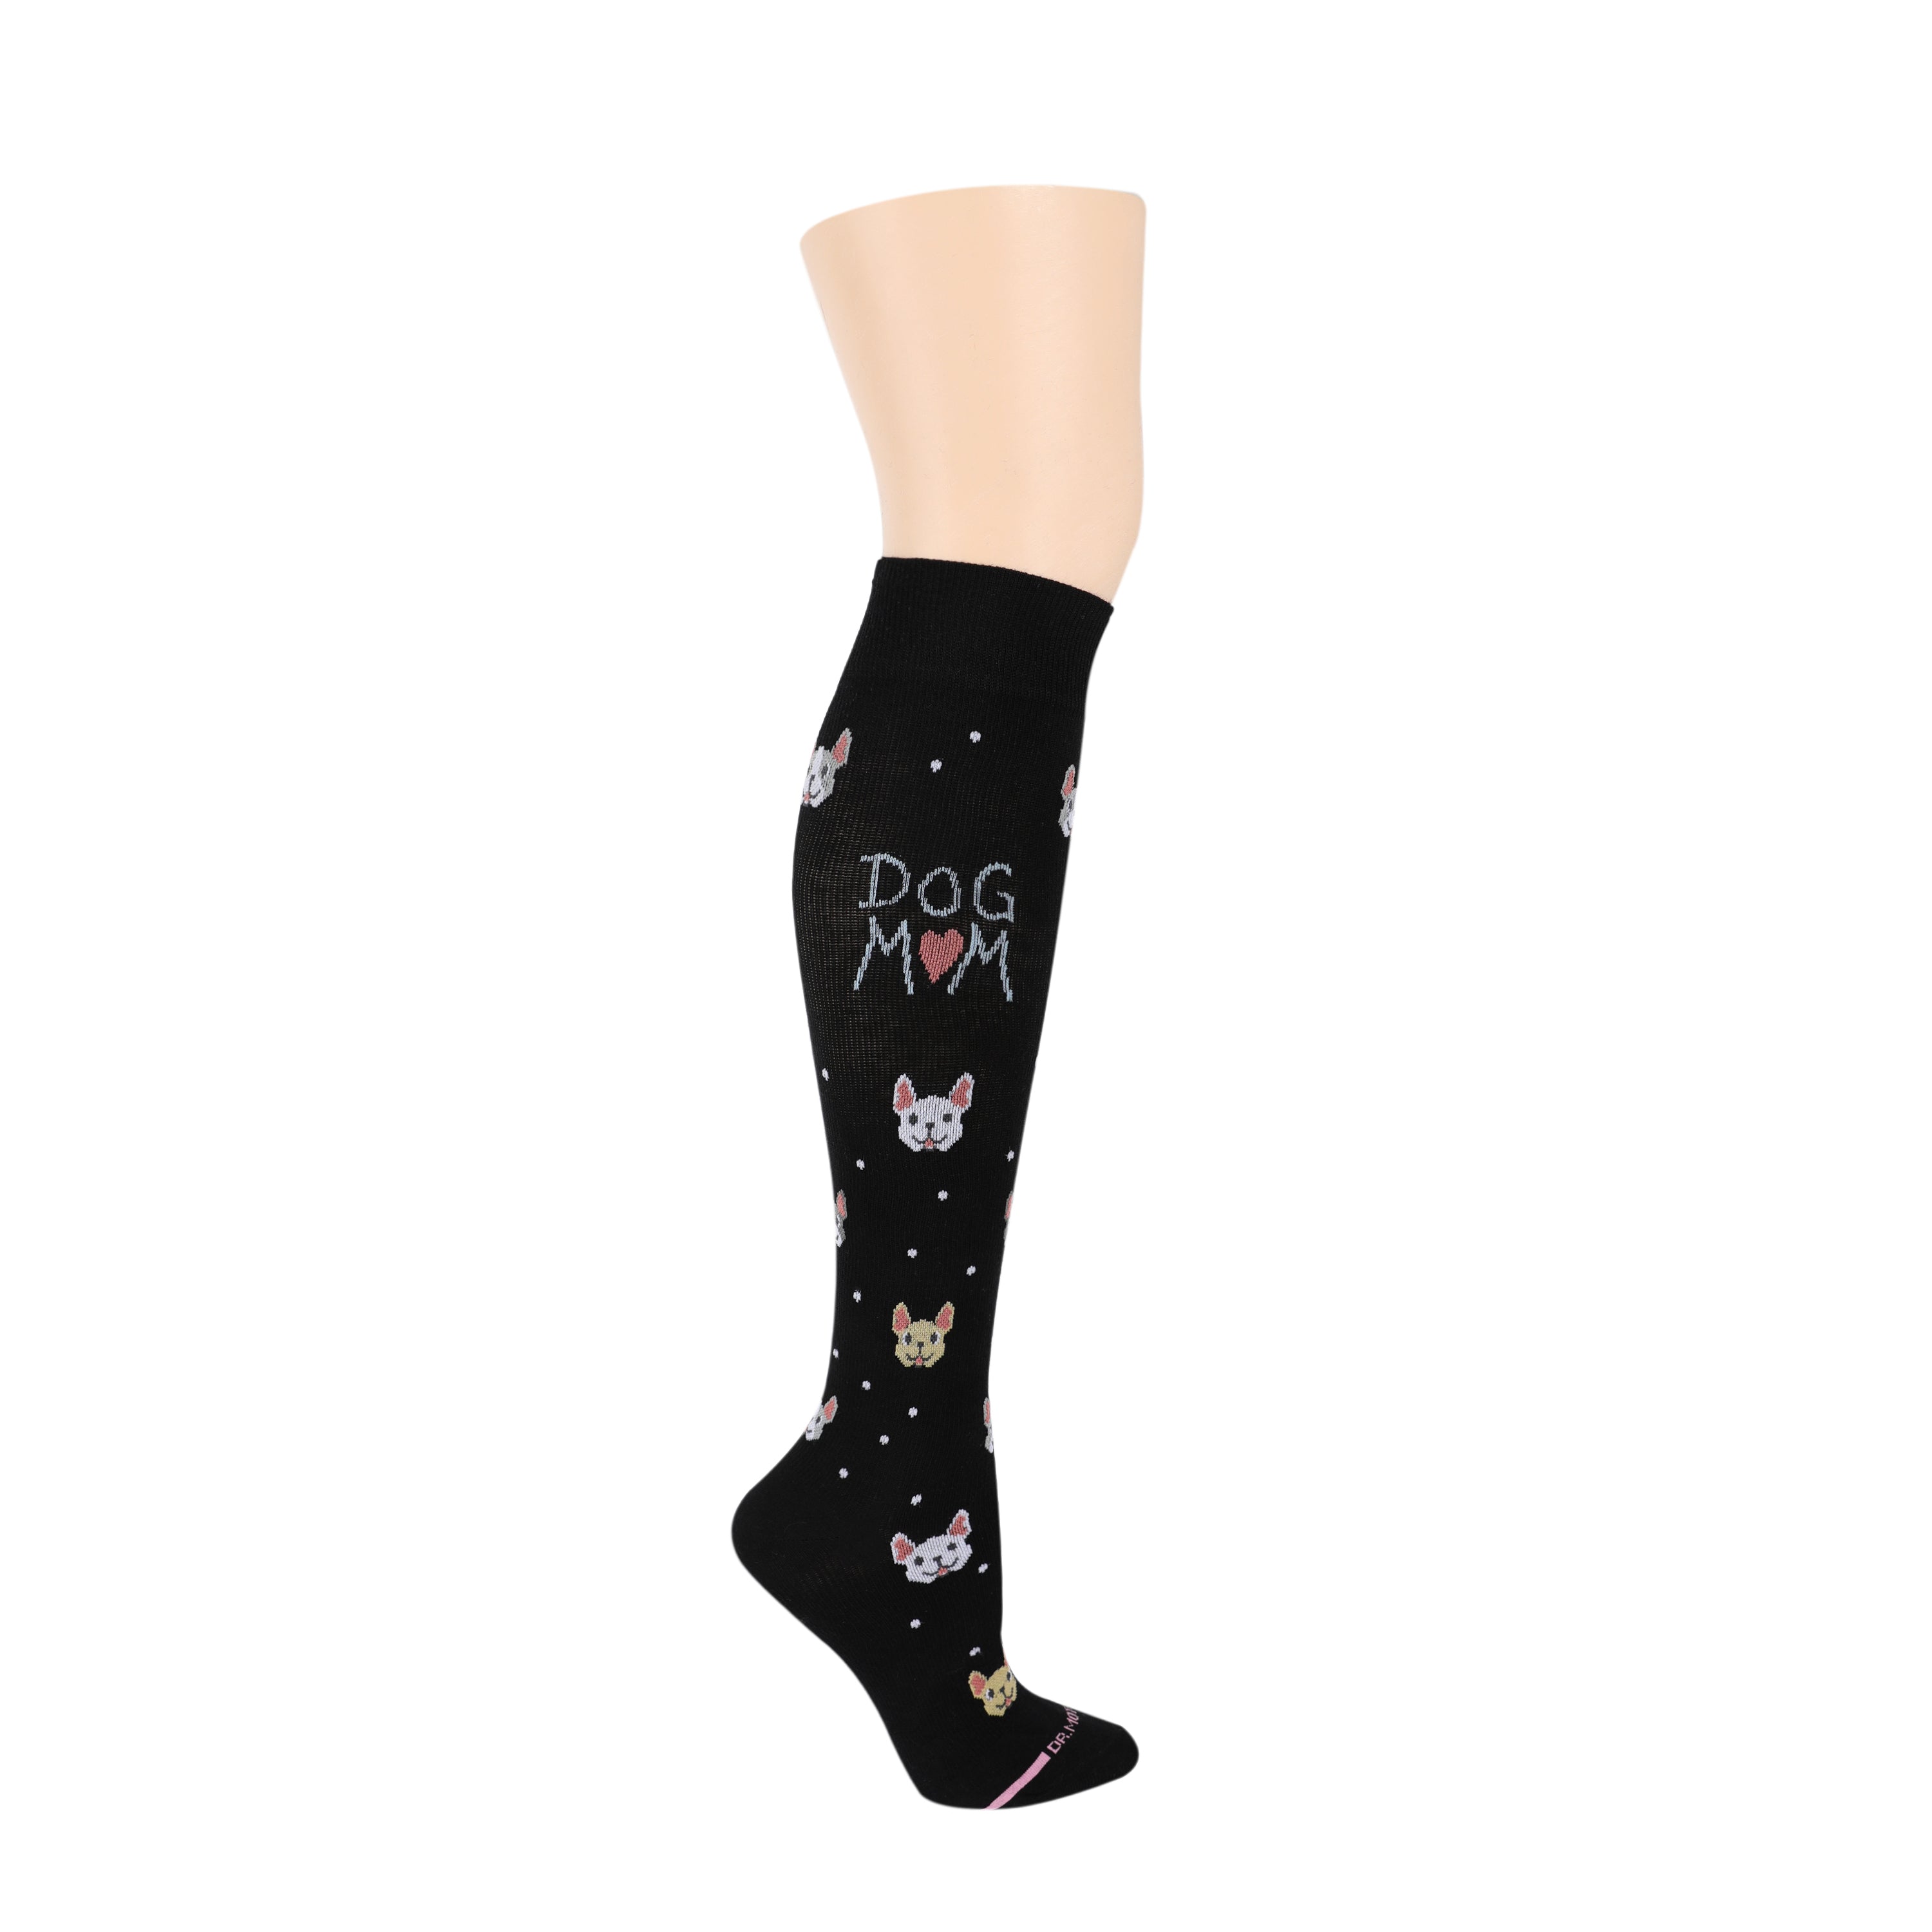 Dog Mom | Knee-High Compression Socks For Women